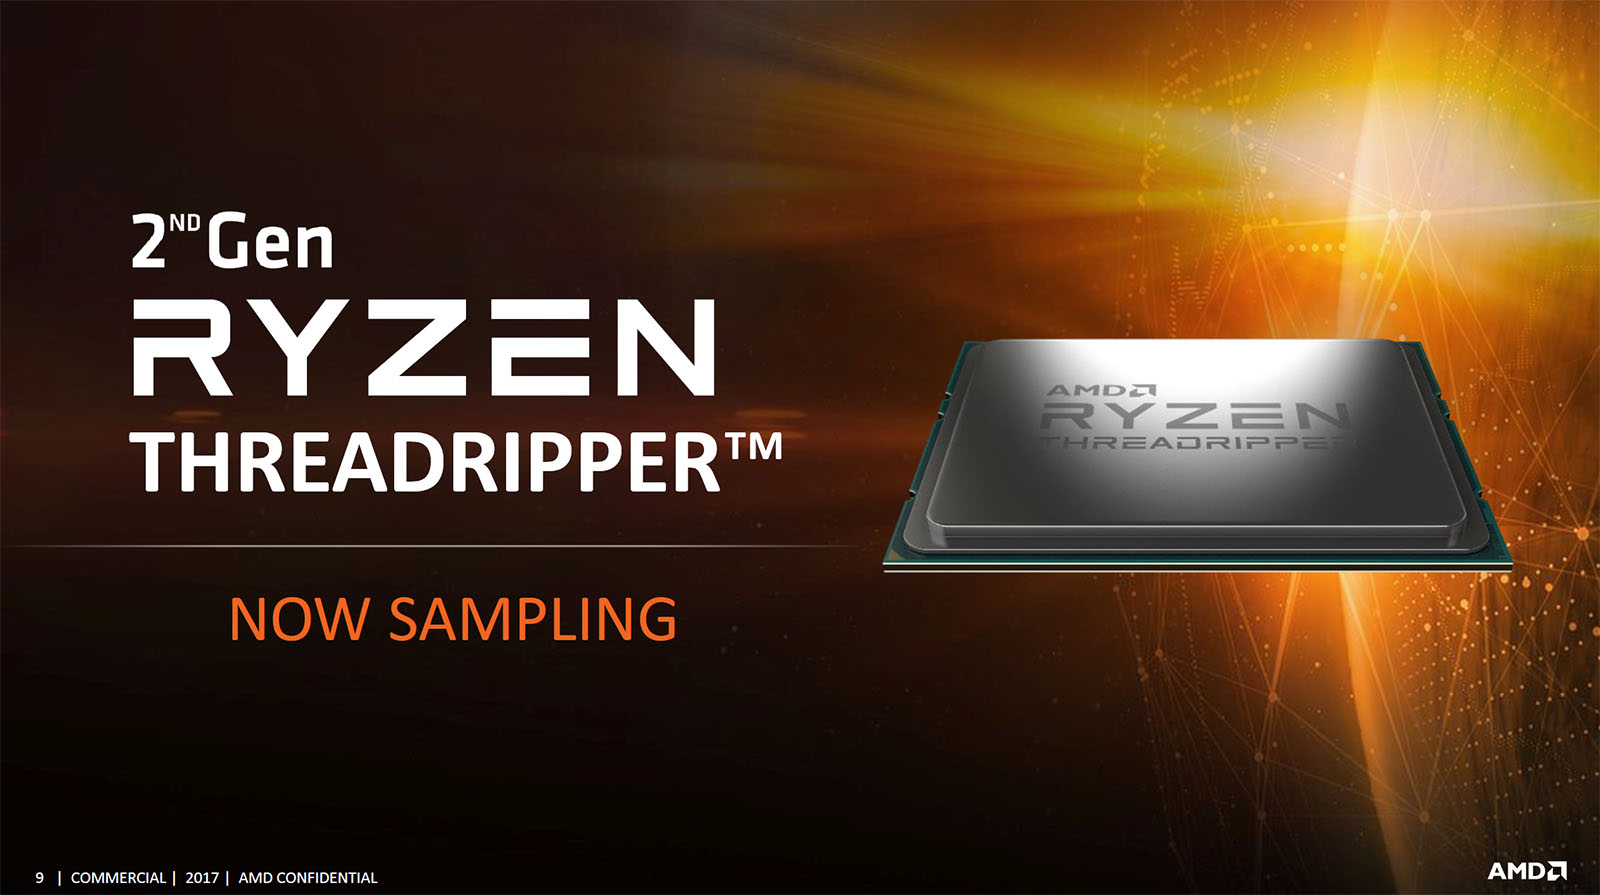 WCCFtech-AMD-Ryzen-Threadripper-2000-pressdeck-